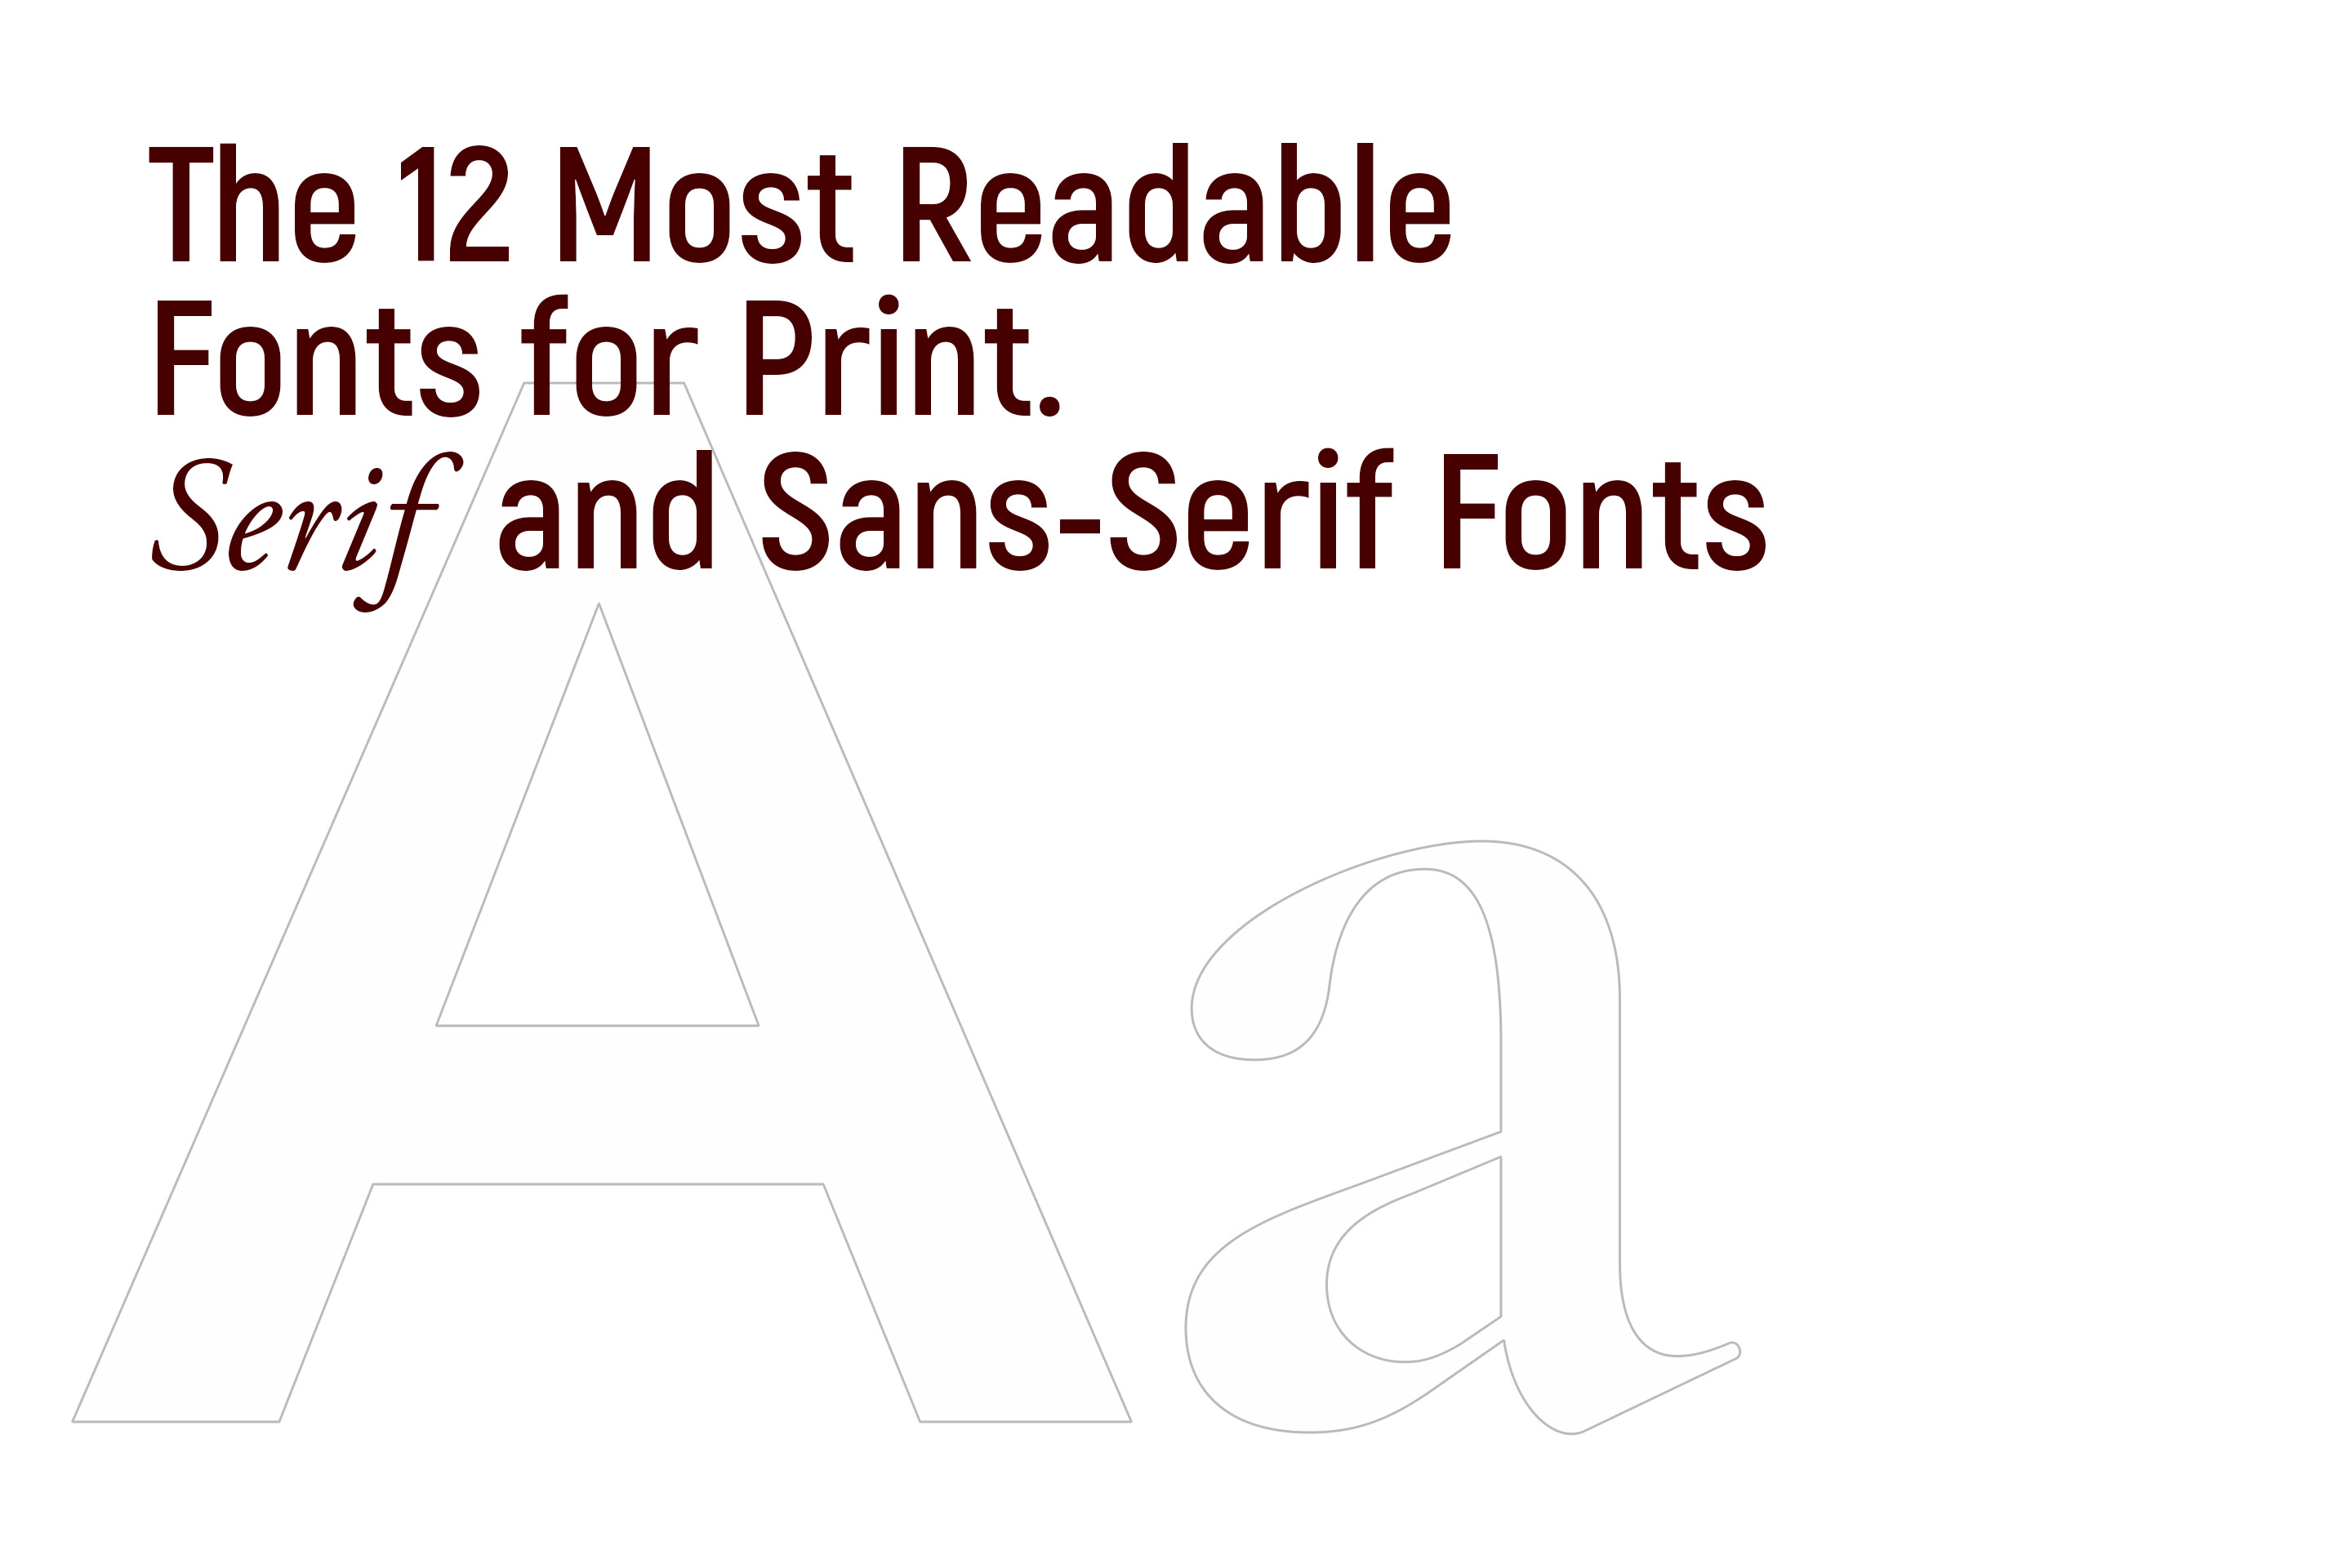 The 12 Most Readable Fonts for Print - by Bernard Kodjo